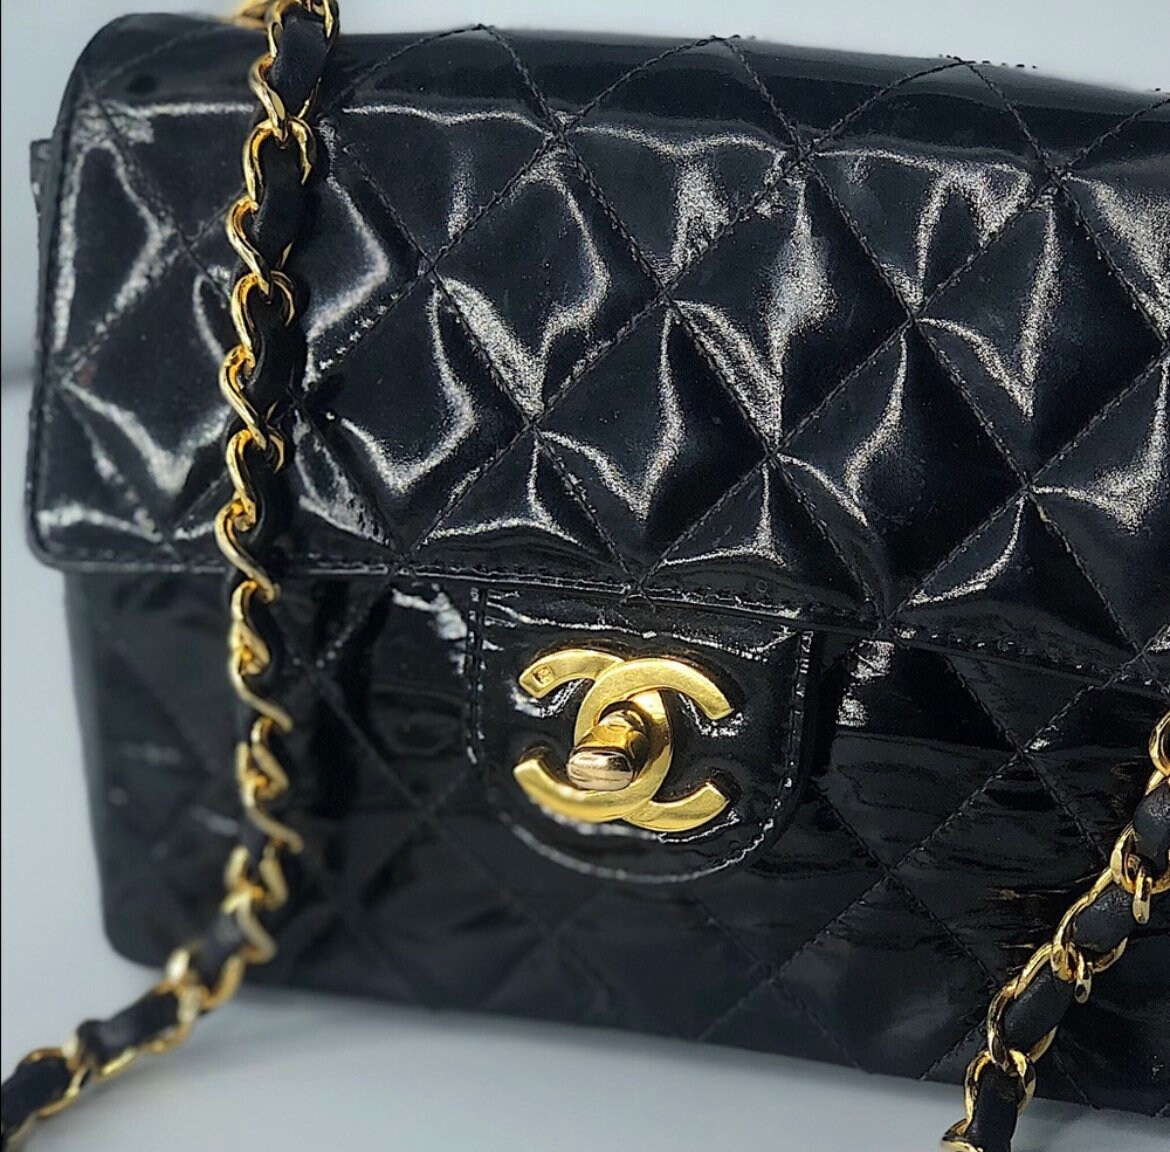 Vintage Chanel Shopping Bag in Brown Fabric — singulié